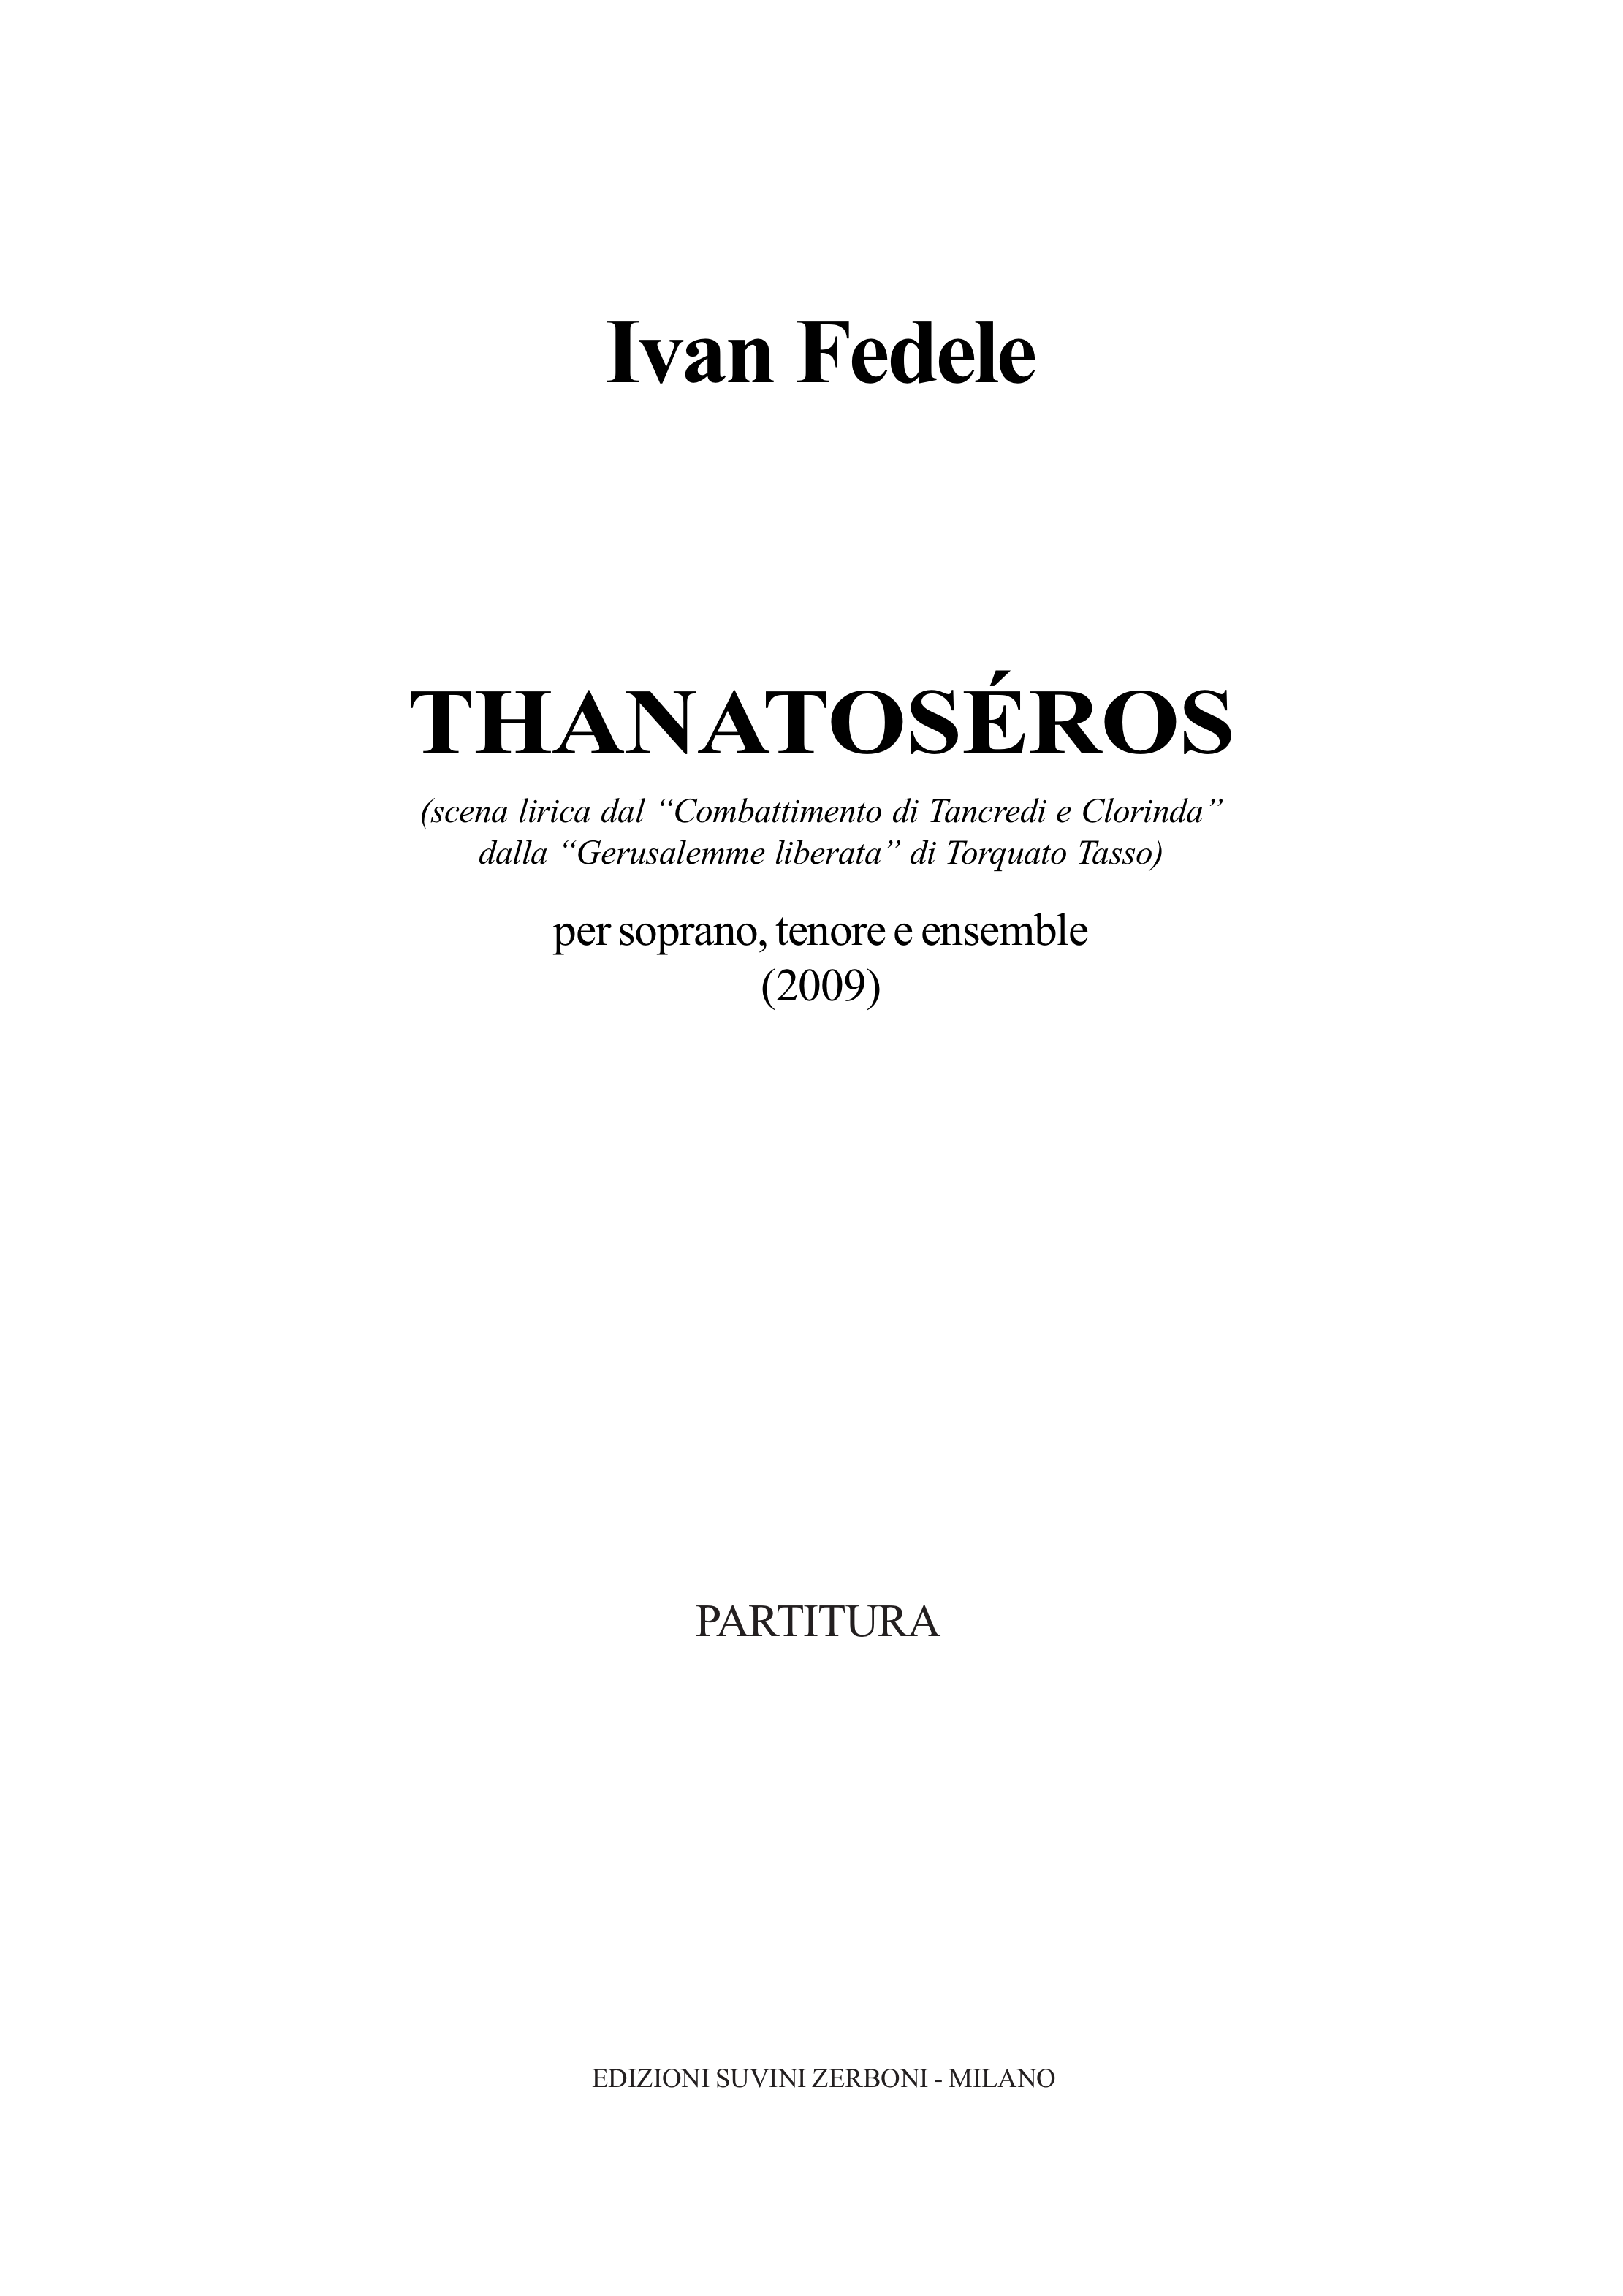 Thanatoseros_Fedele 1